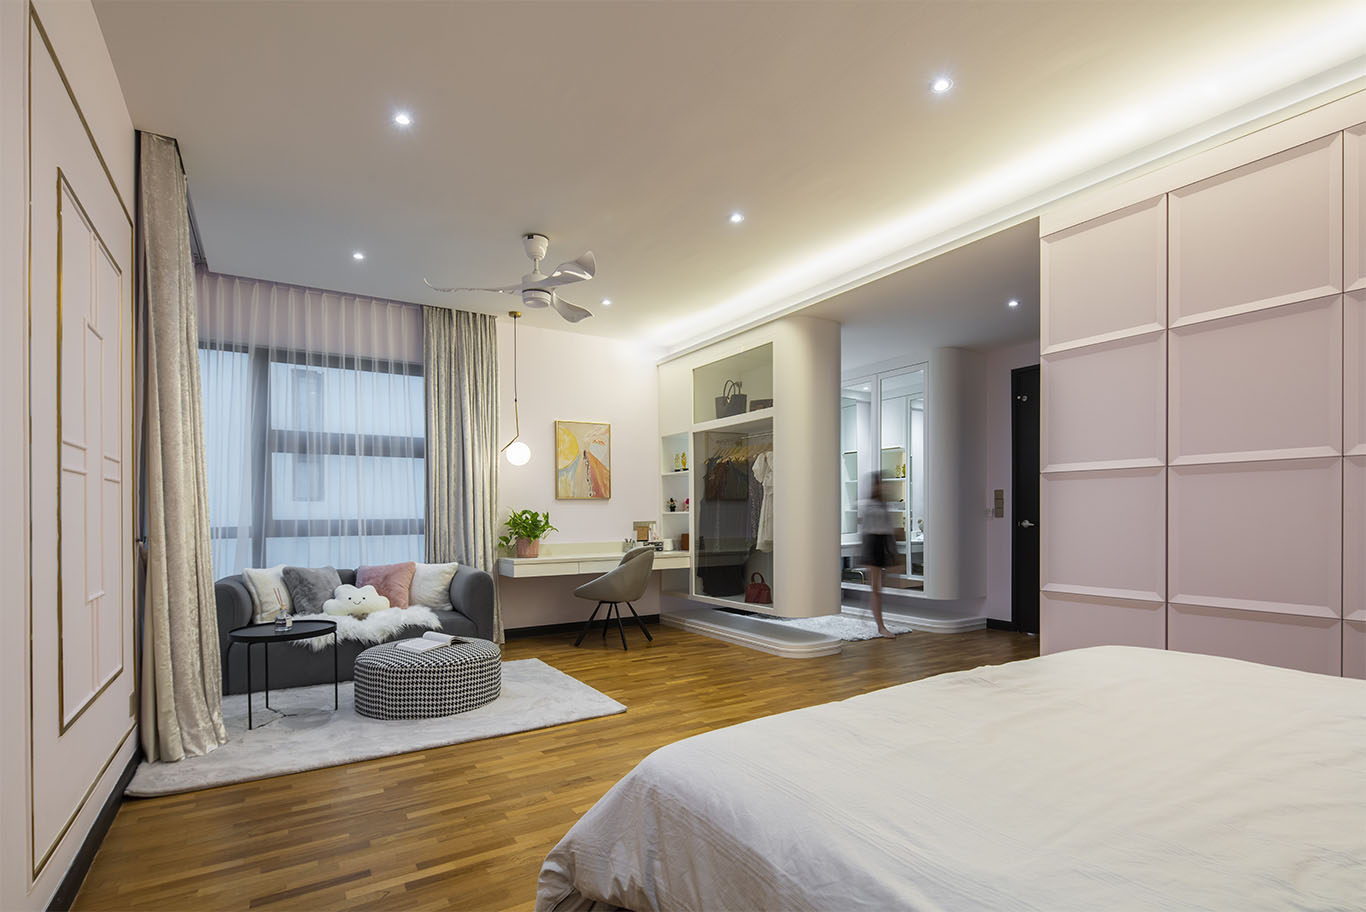 MIEUX La Famillie De Lee modern bedroom design with hidden curtain and wooden floor 3 mieux interior design